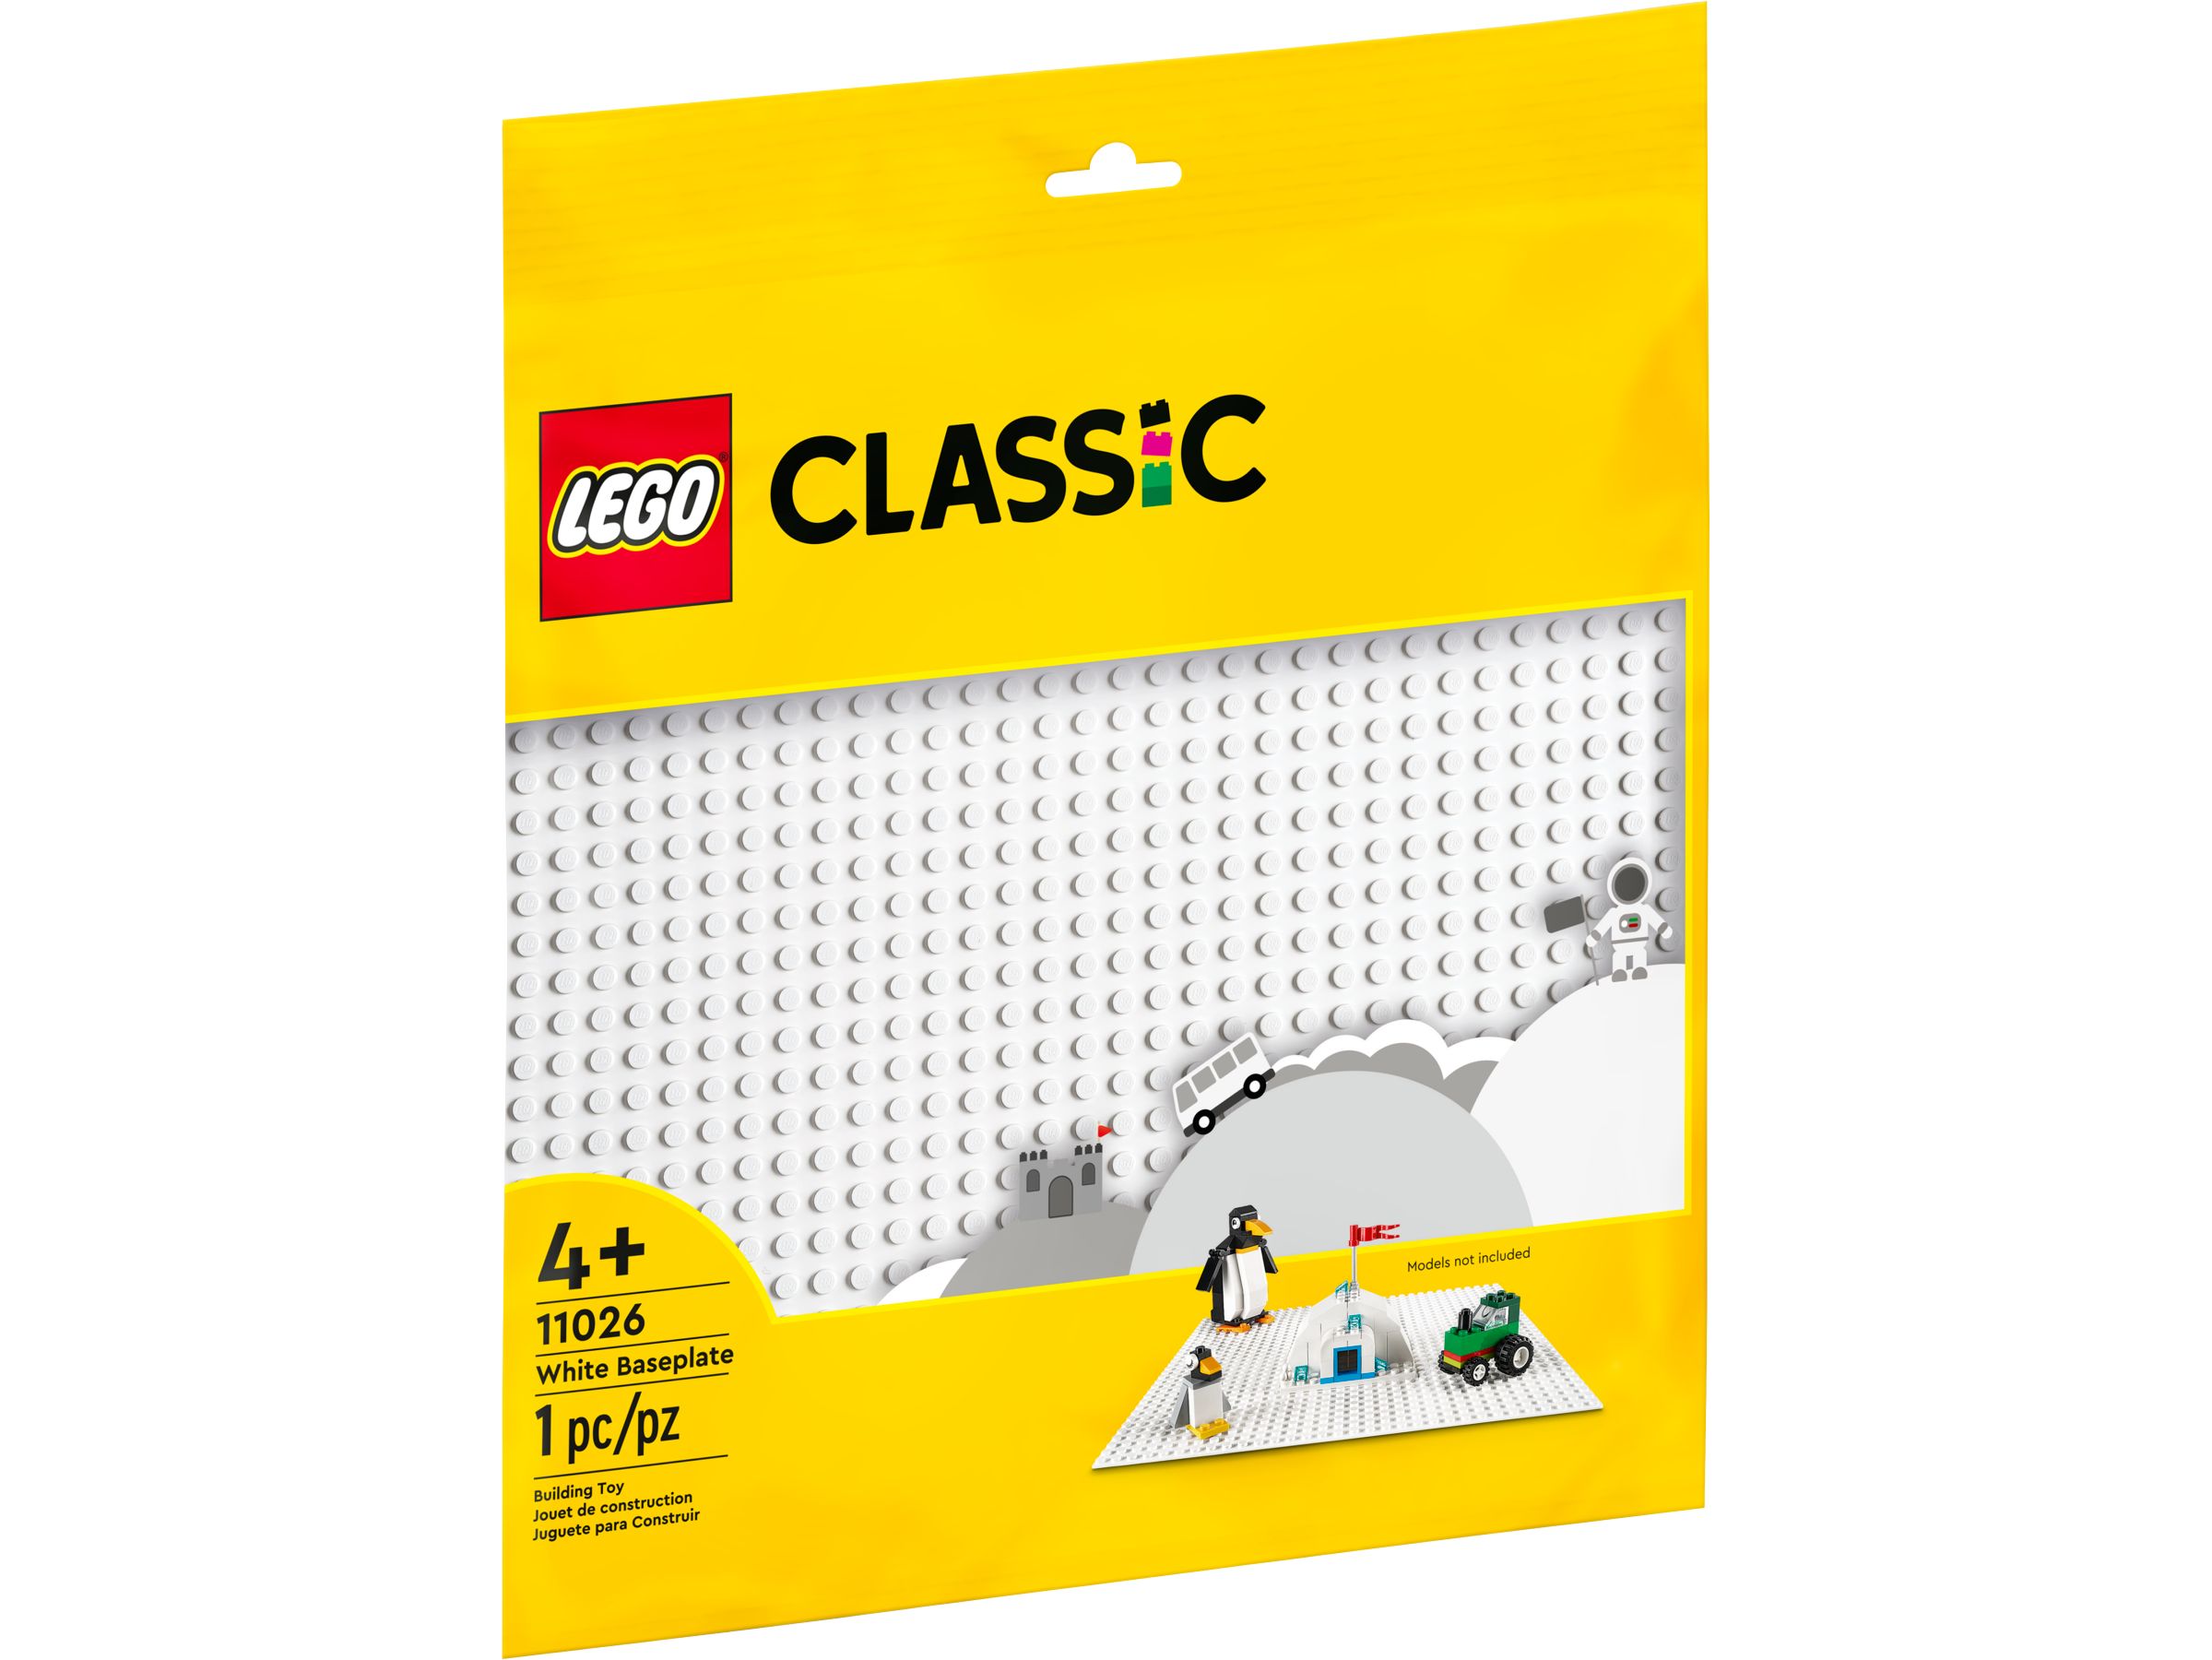 LEGO Classic 11026 Weiße Bauplatte LEGO_11026_alt1.jpg